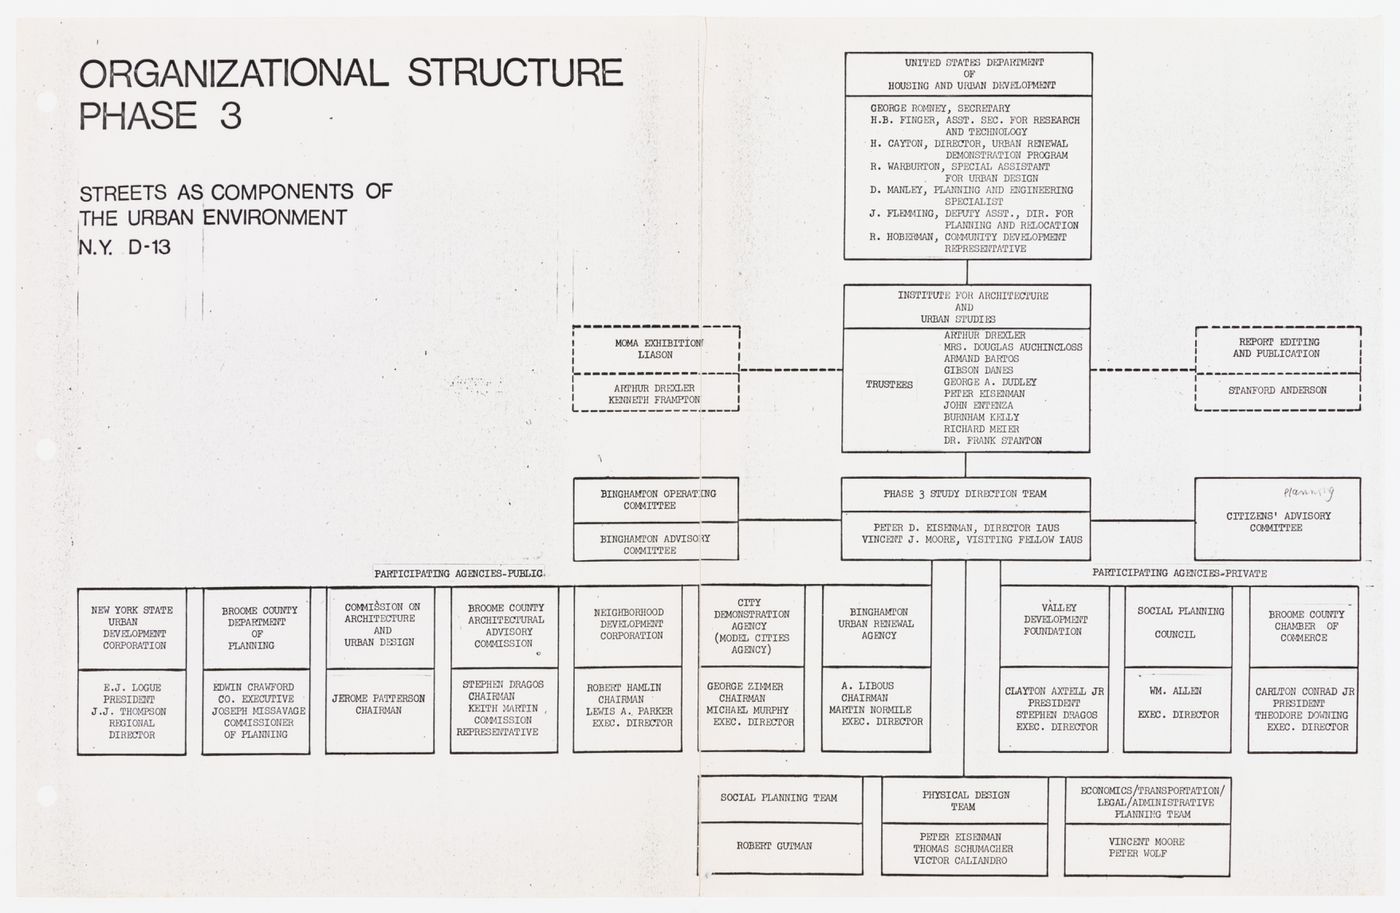 Diagram of organizational structure phase III, Binghamton Street Study